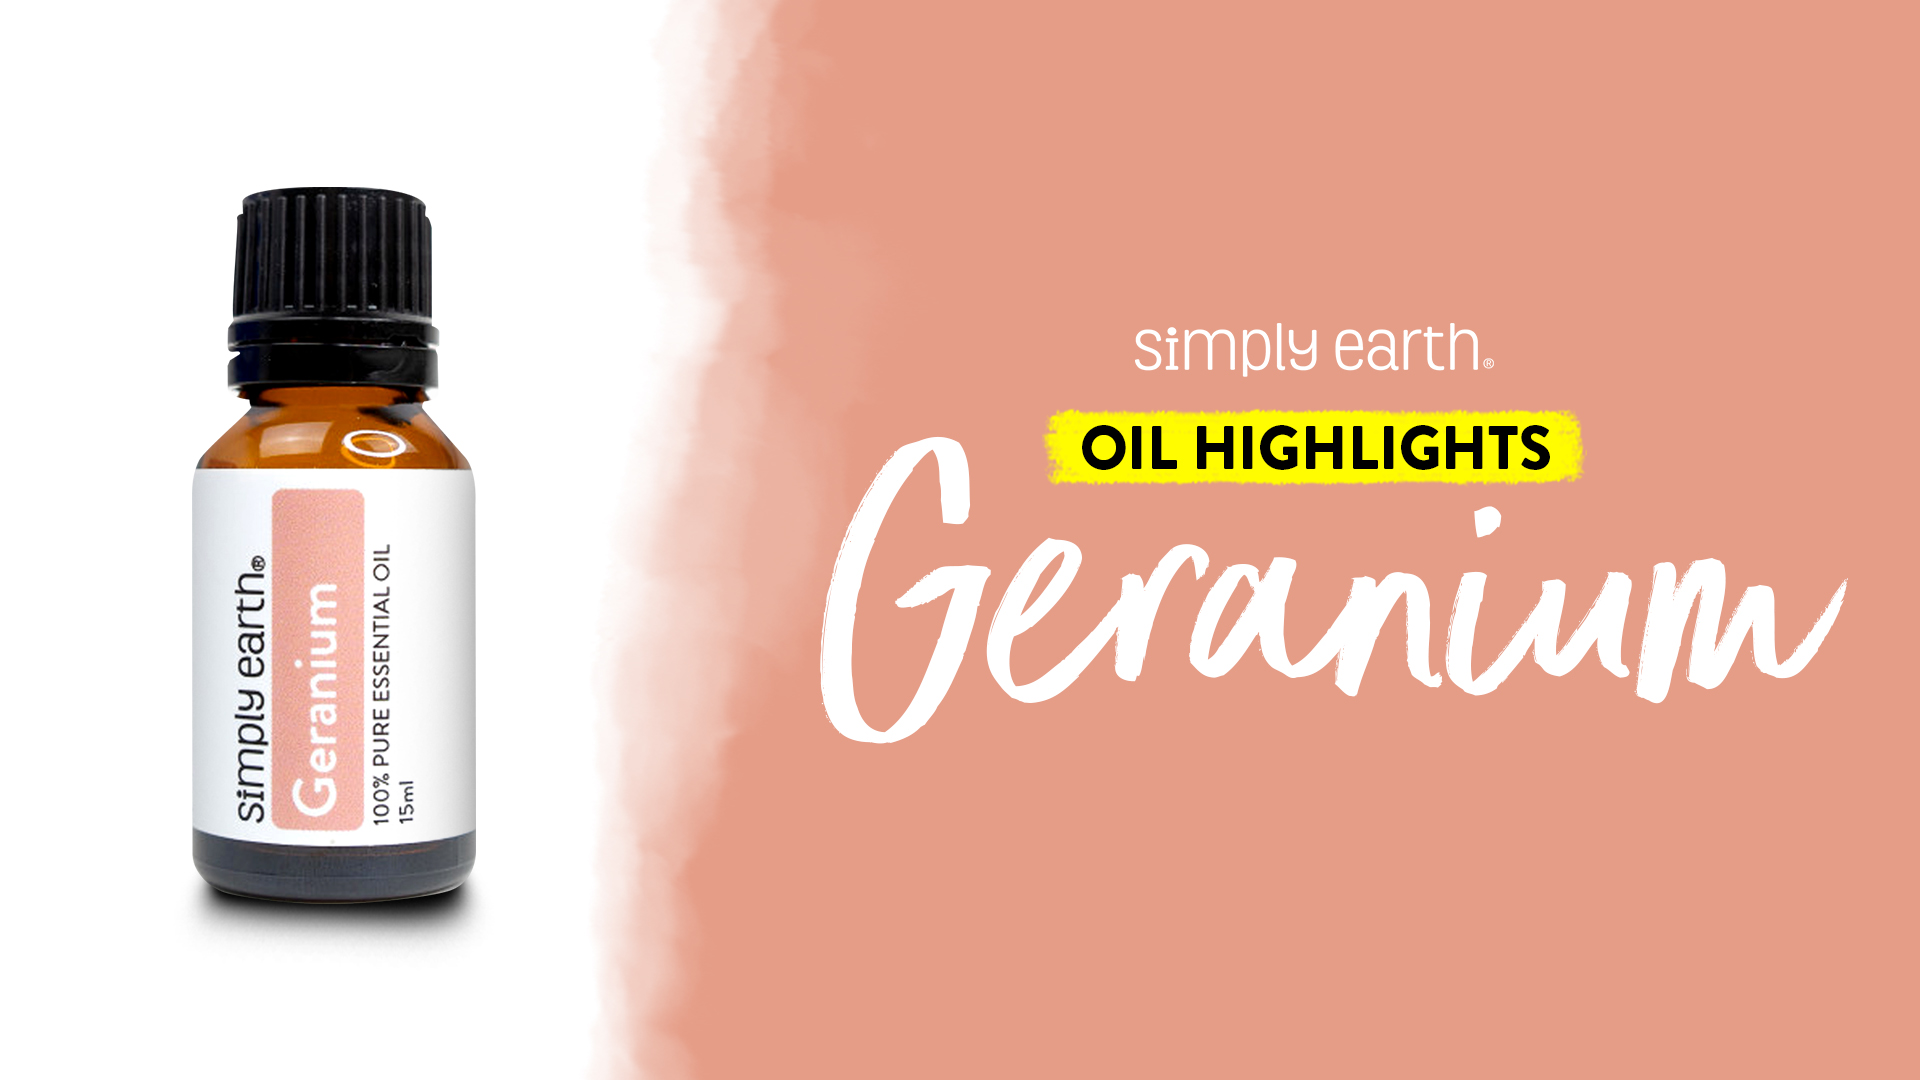 The Top Benefits & Uses of Geranium Essential Oil